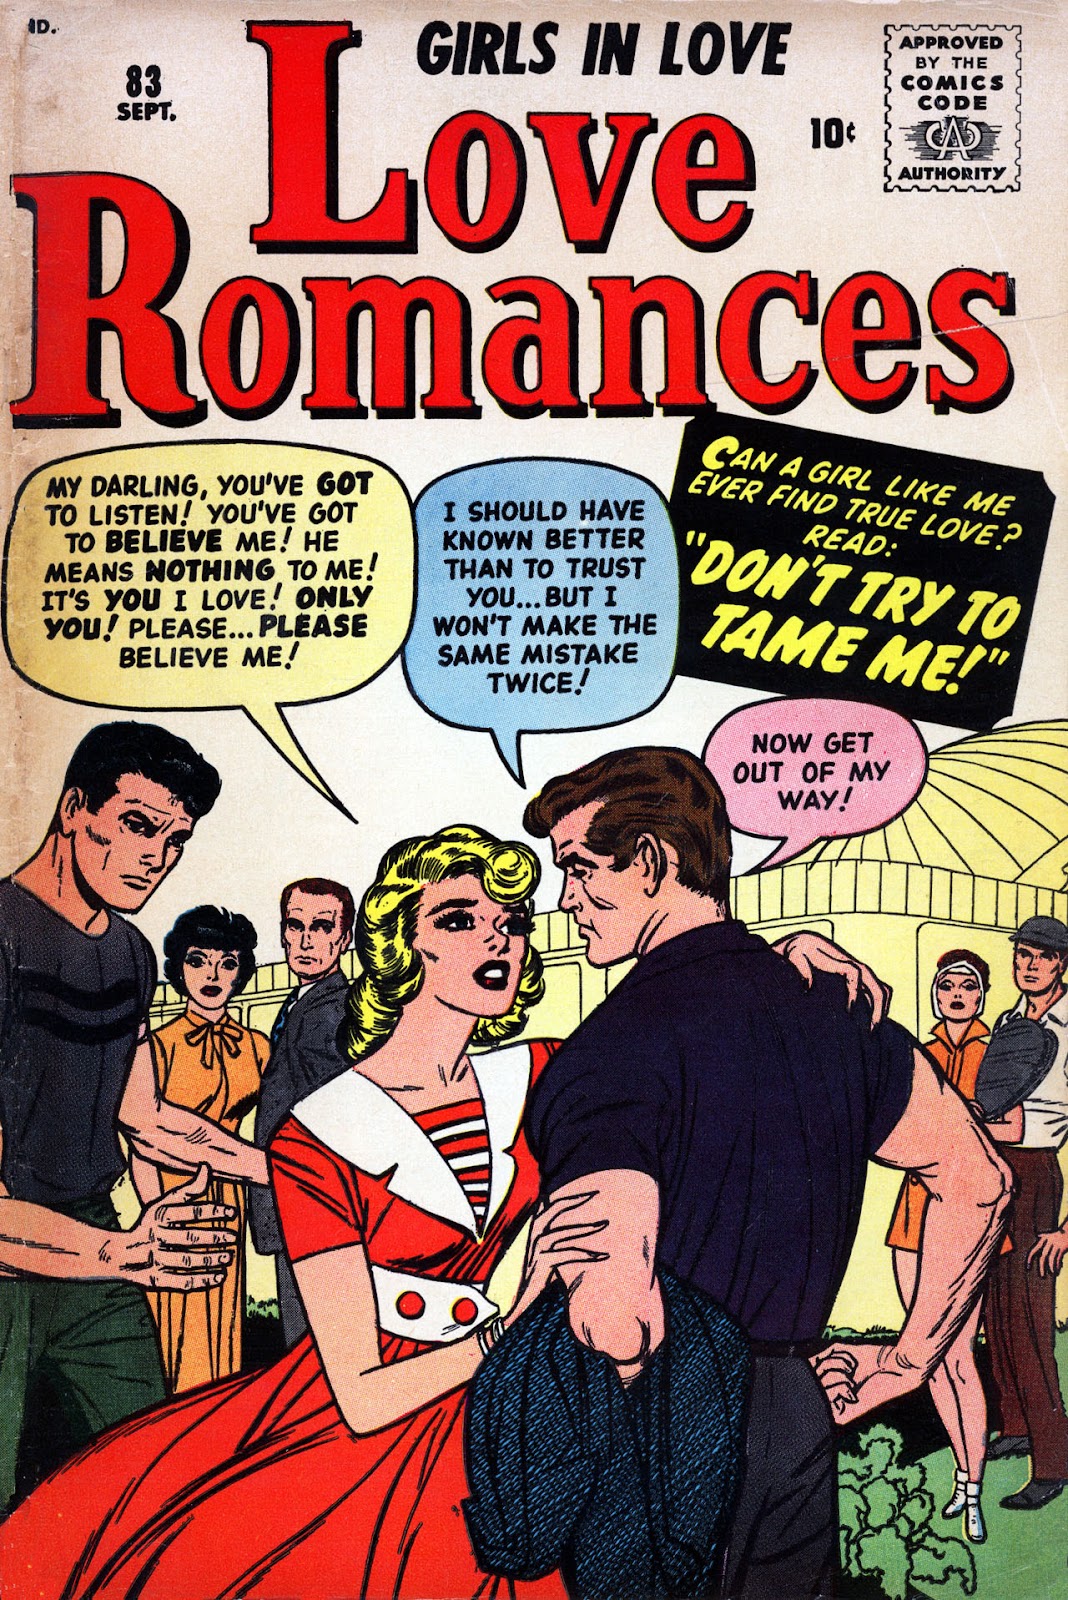 Love Romances (1949) issue 83 - Page 1